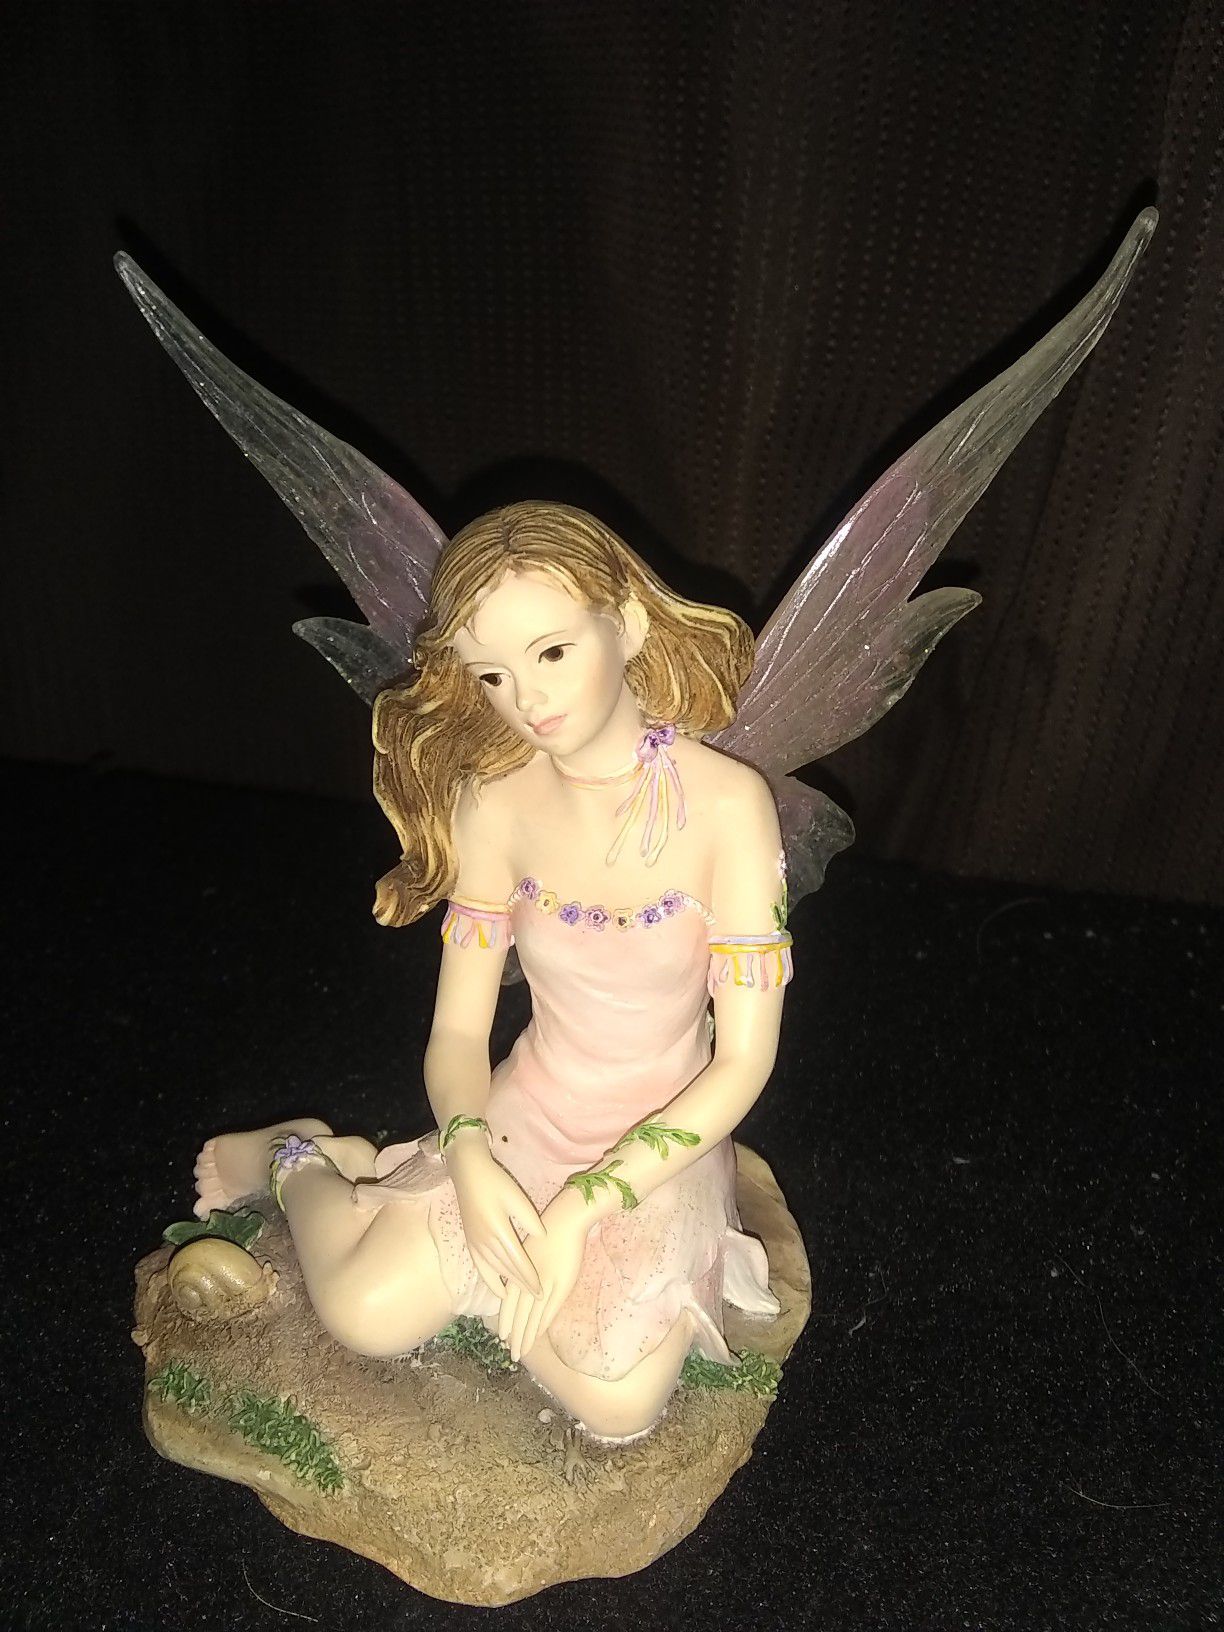 Faerie Glen "Terratyme" Fairy Figurine Retired 2003